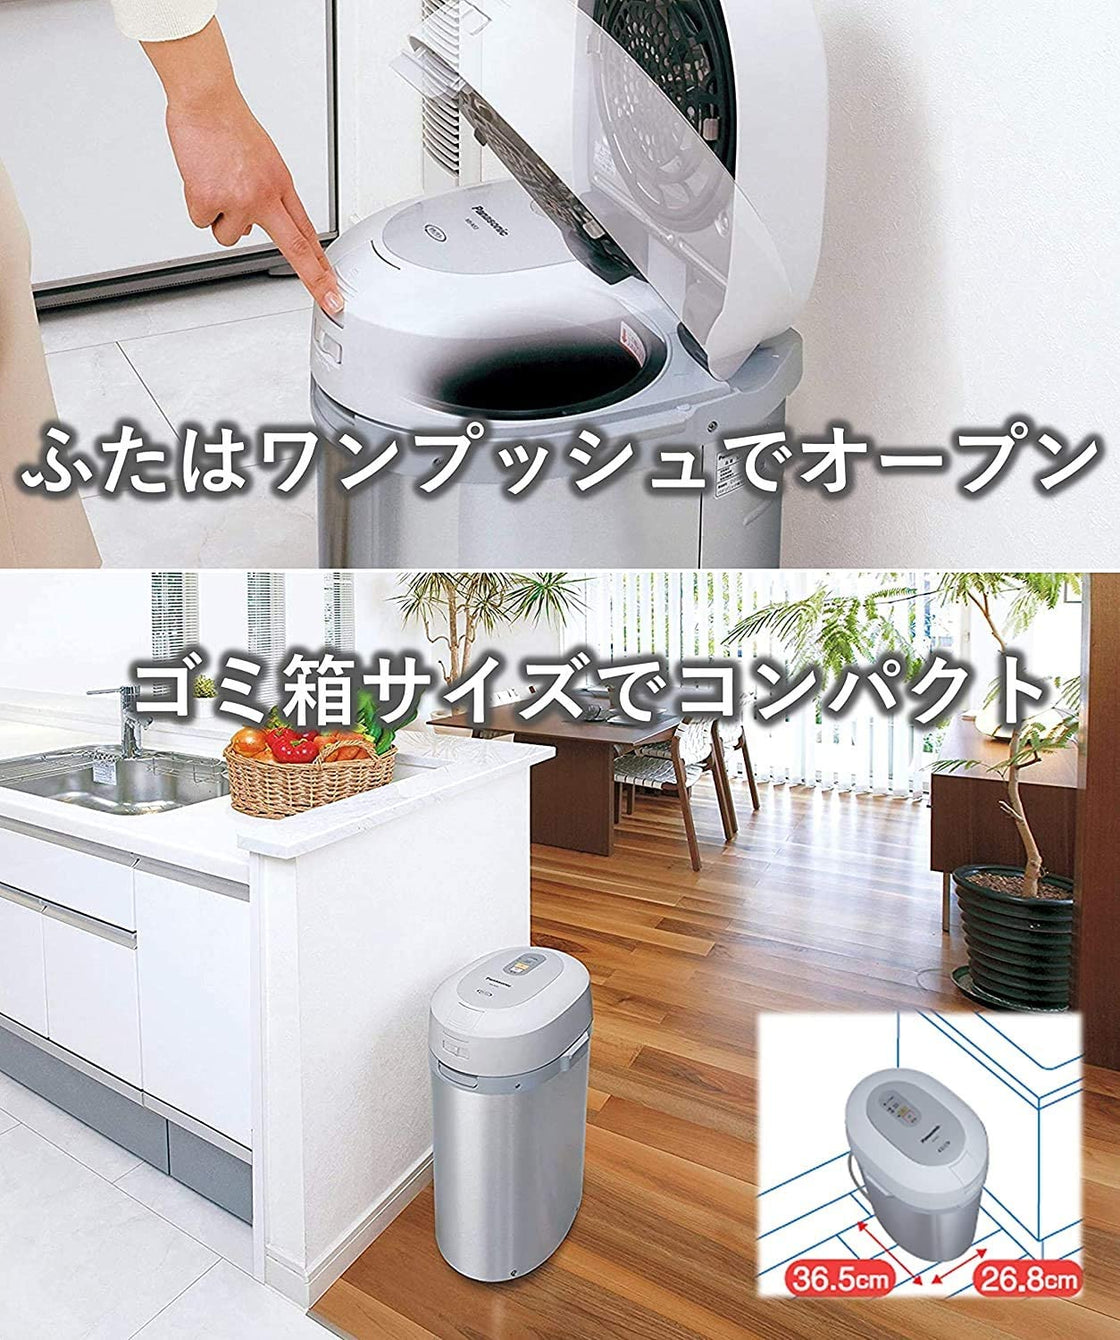 Panasonic household food waste disposer warm air drying type